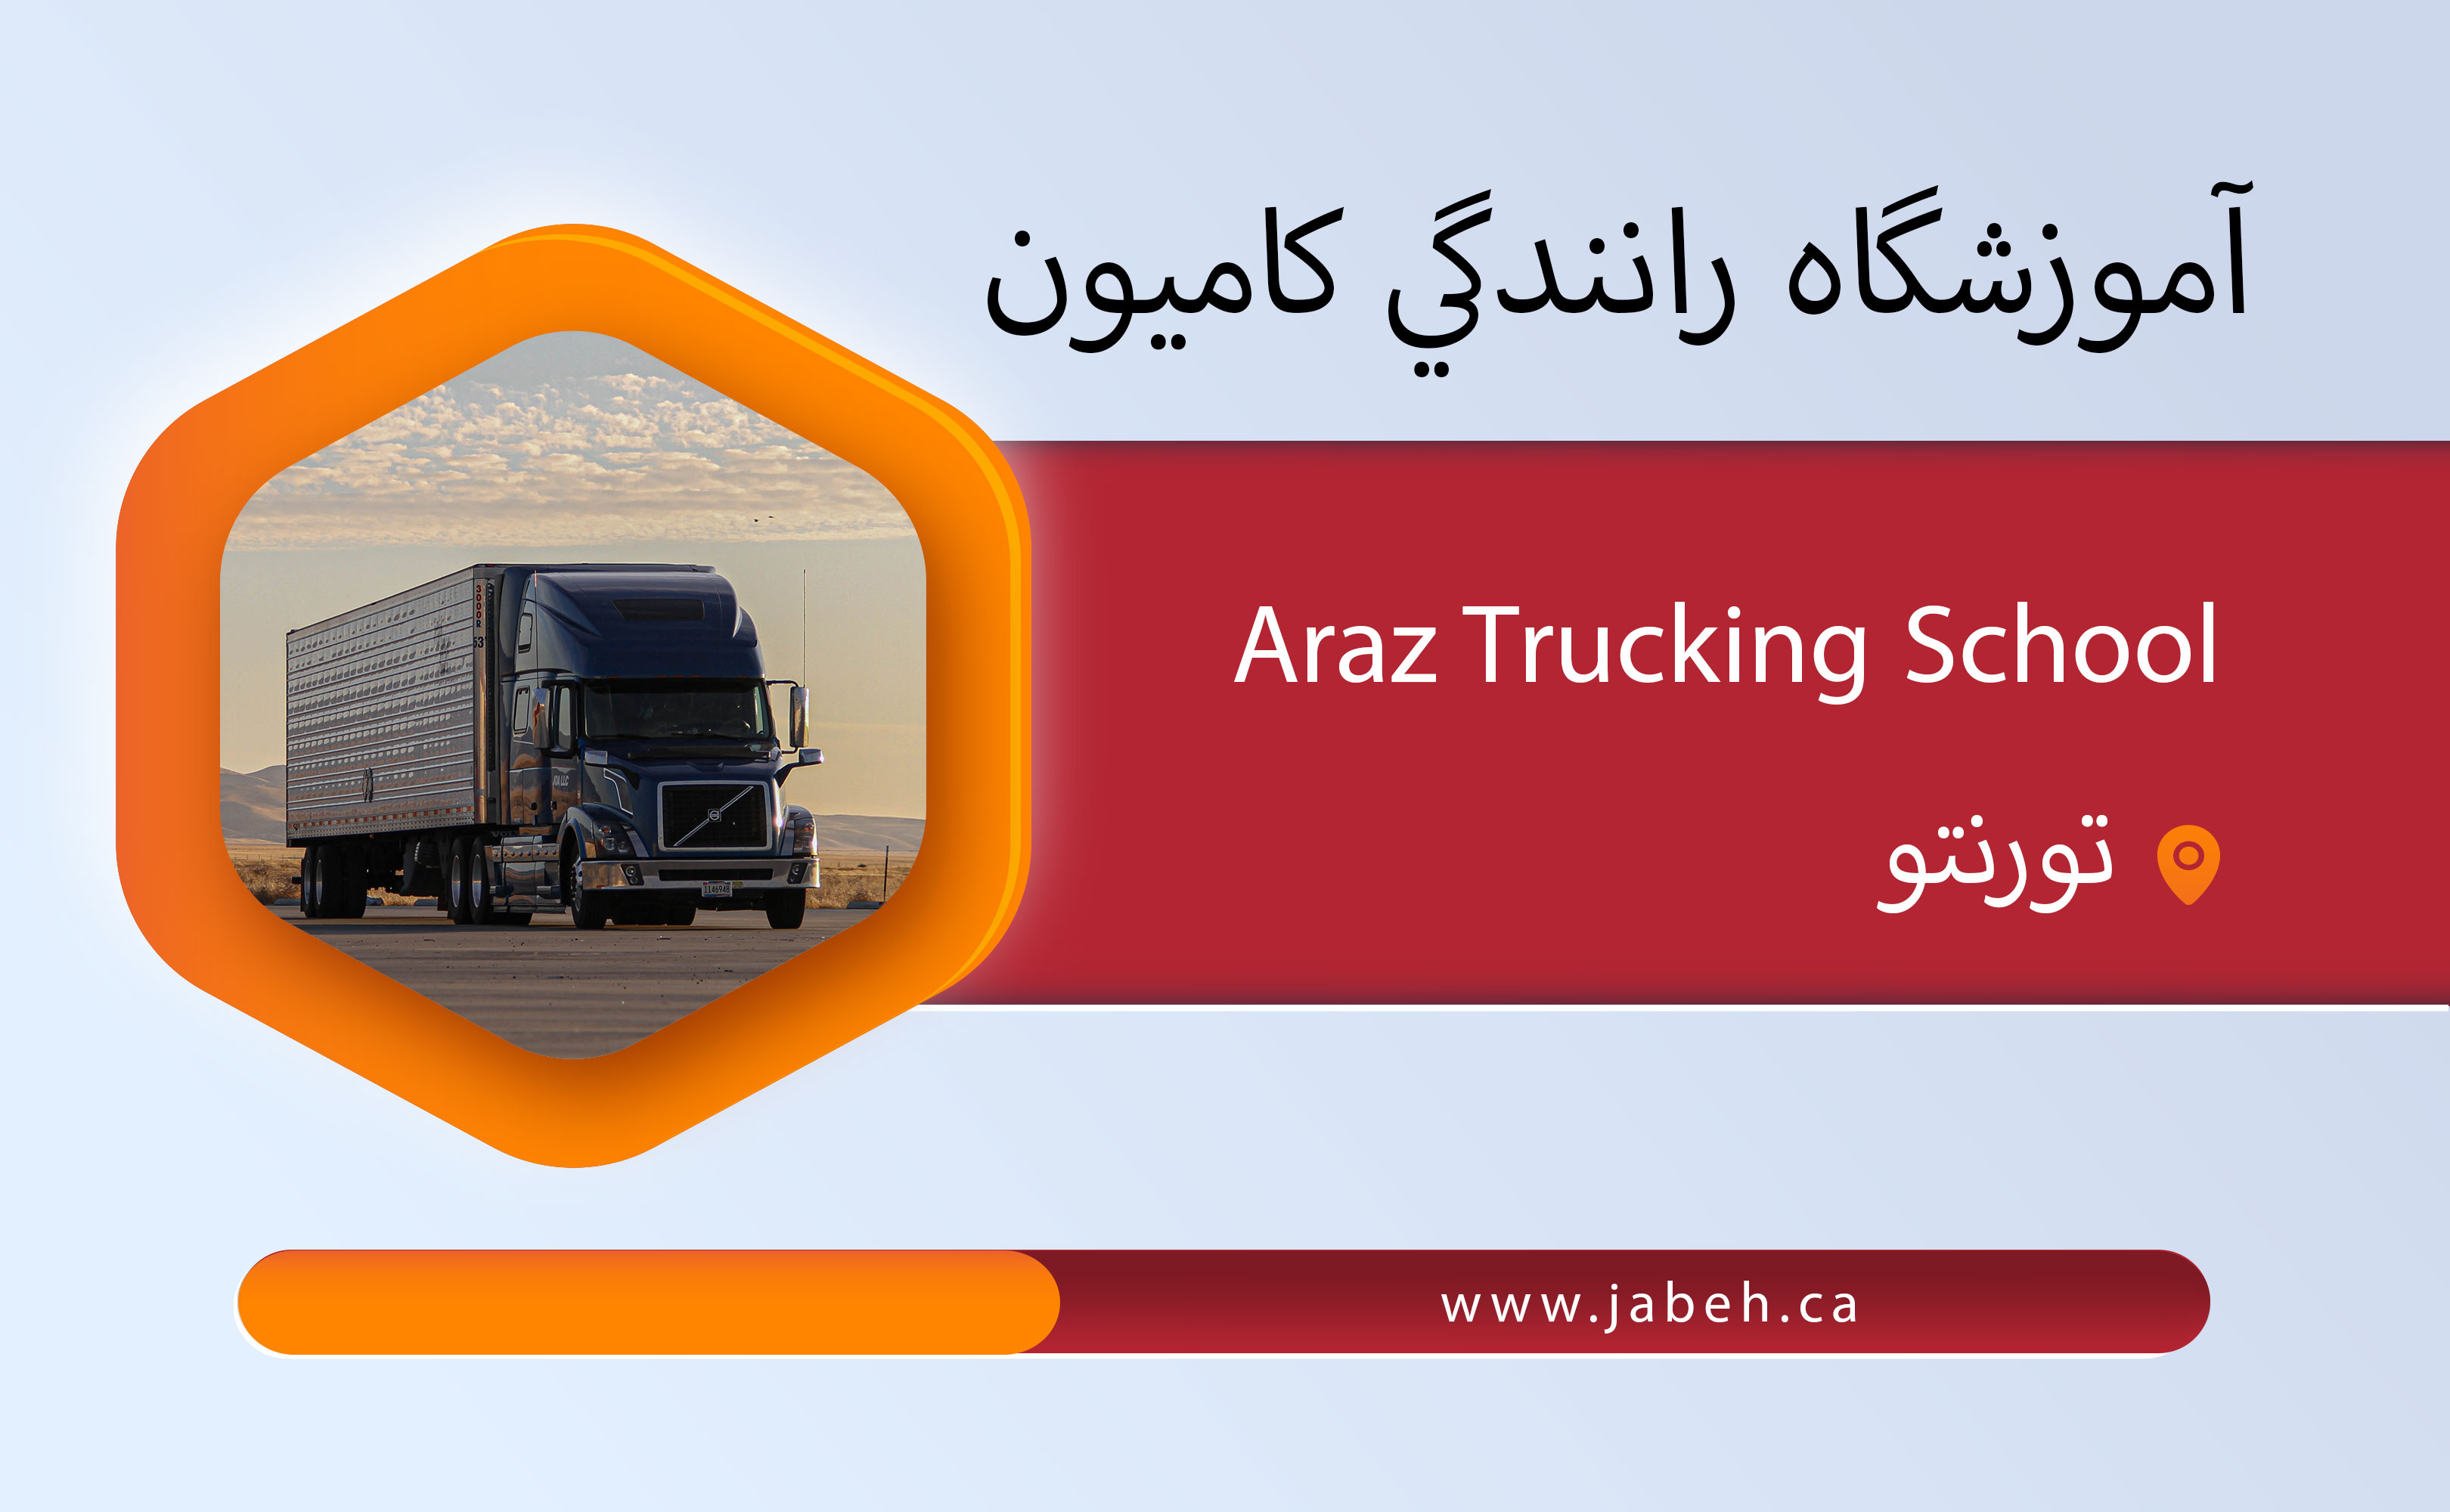 Araz Trucking School in Toronto